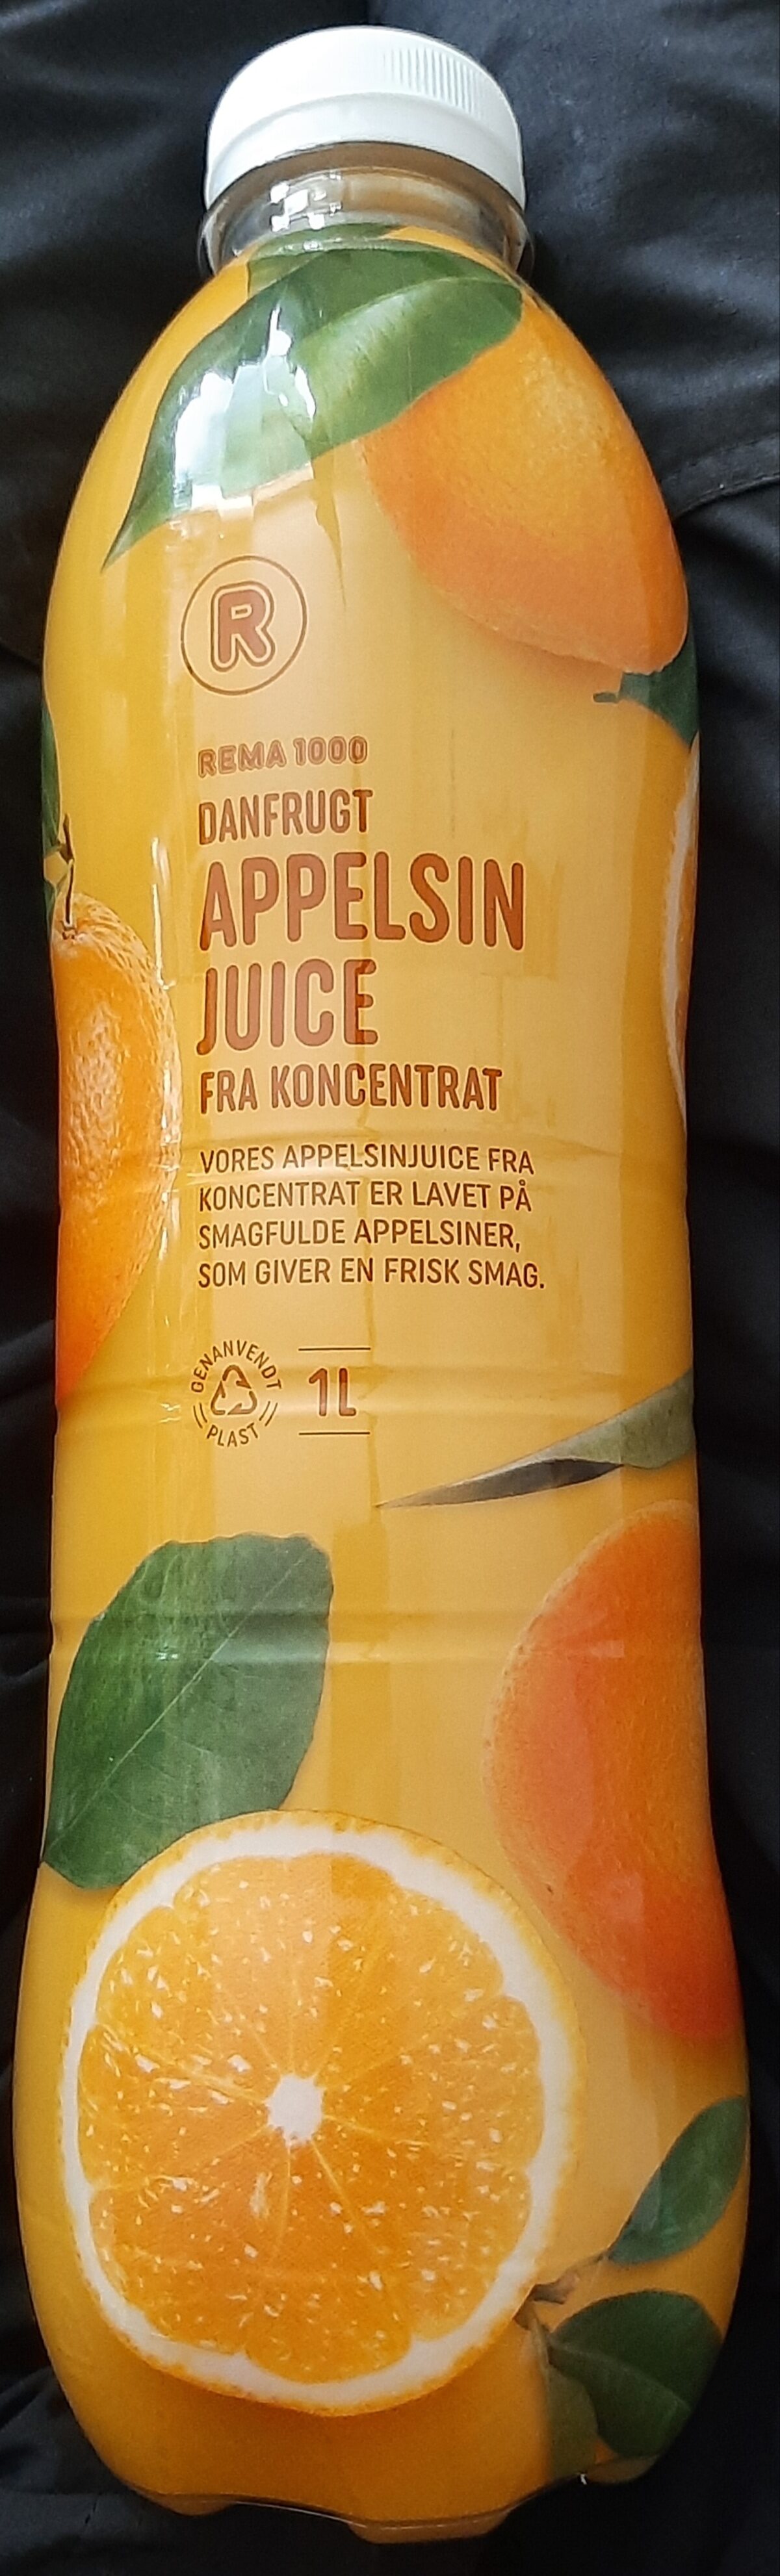 Danfrugt Appelsin Juice - Produkt - en